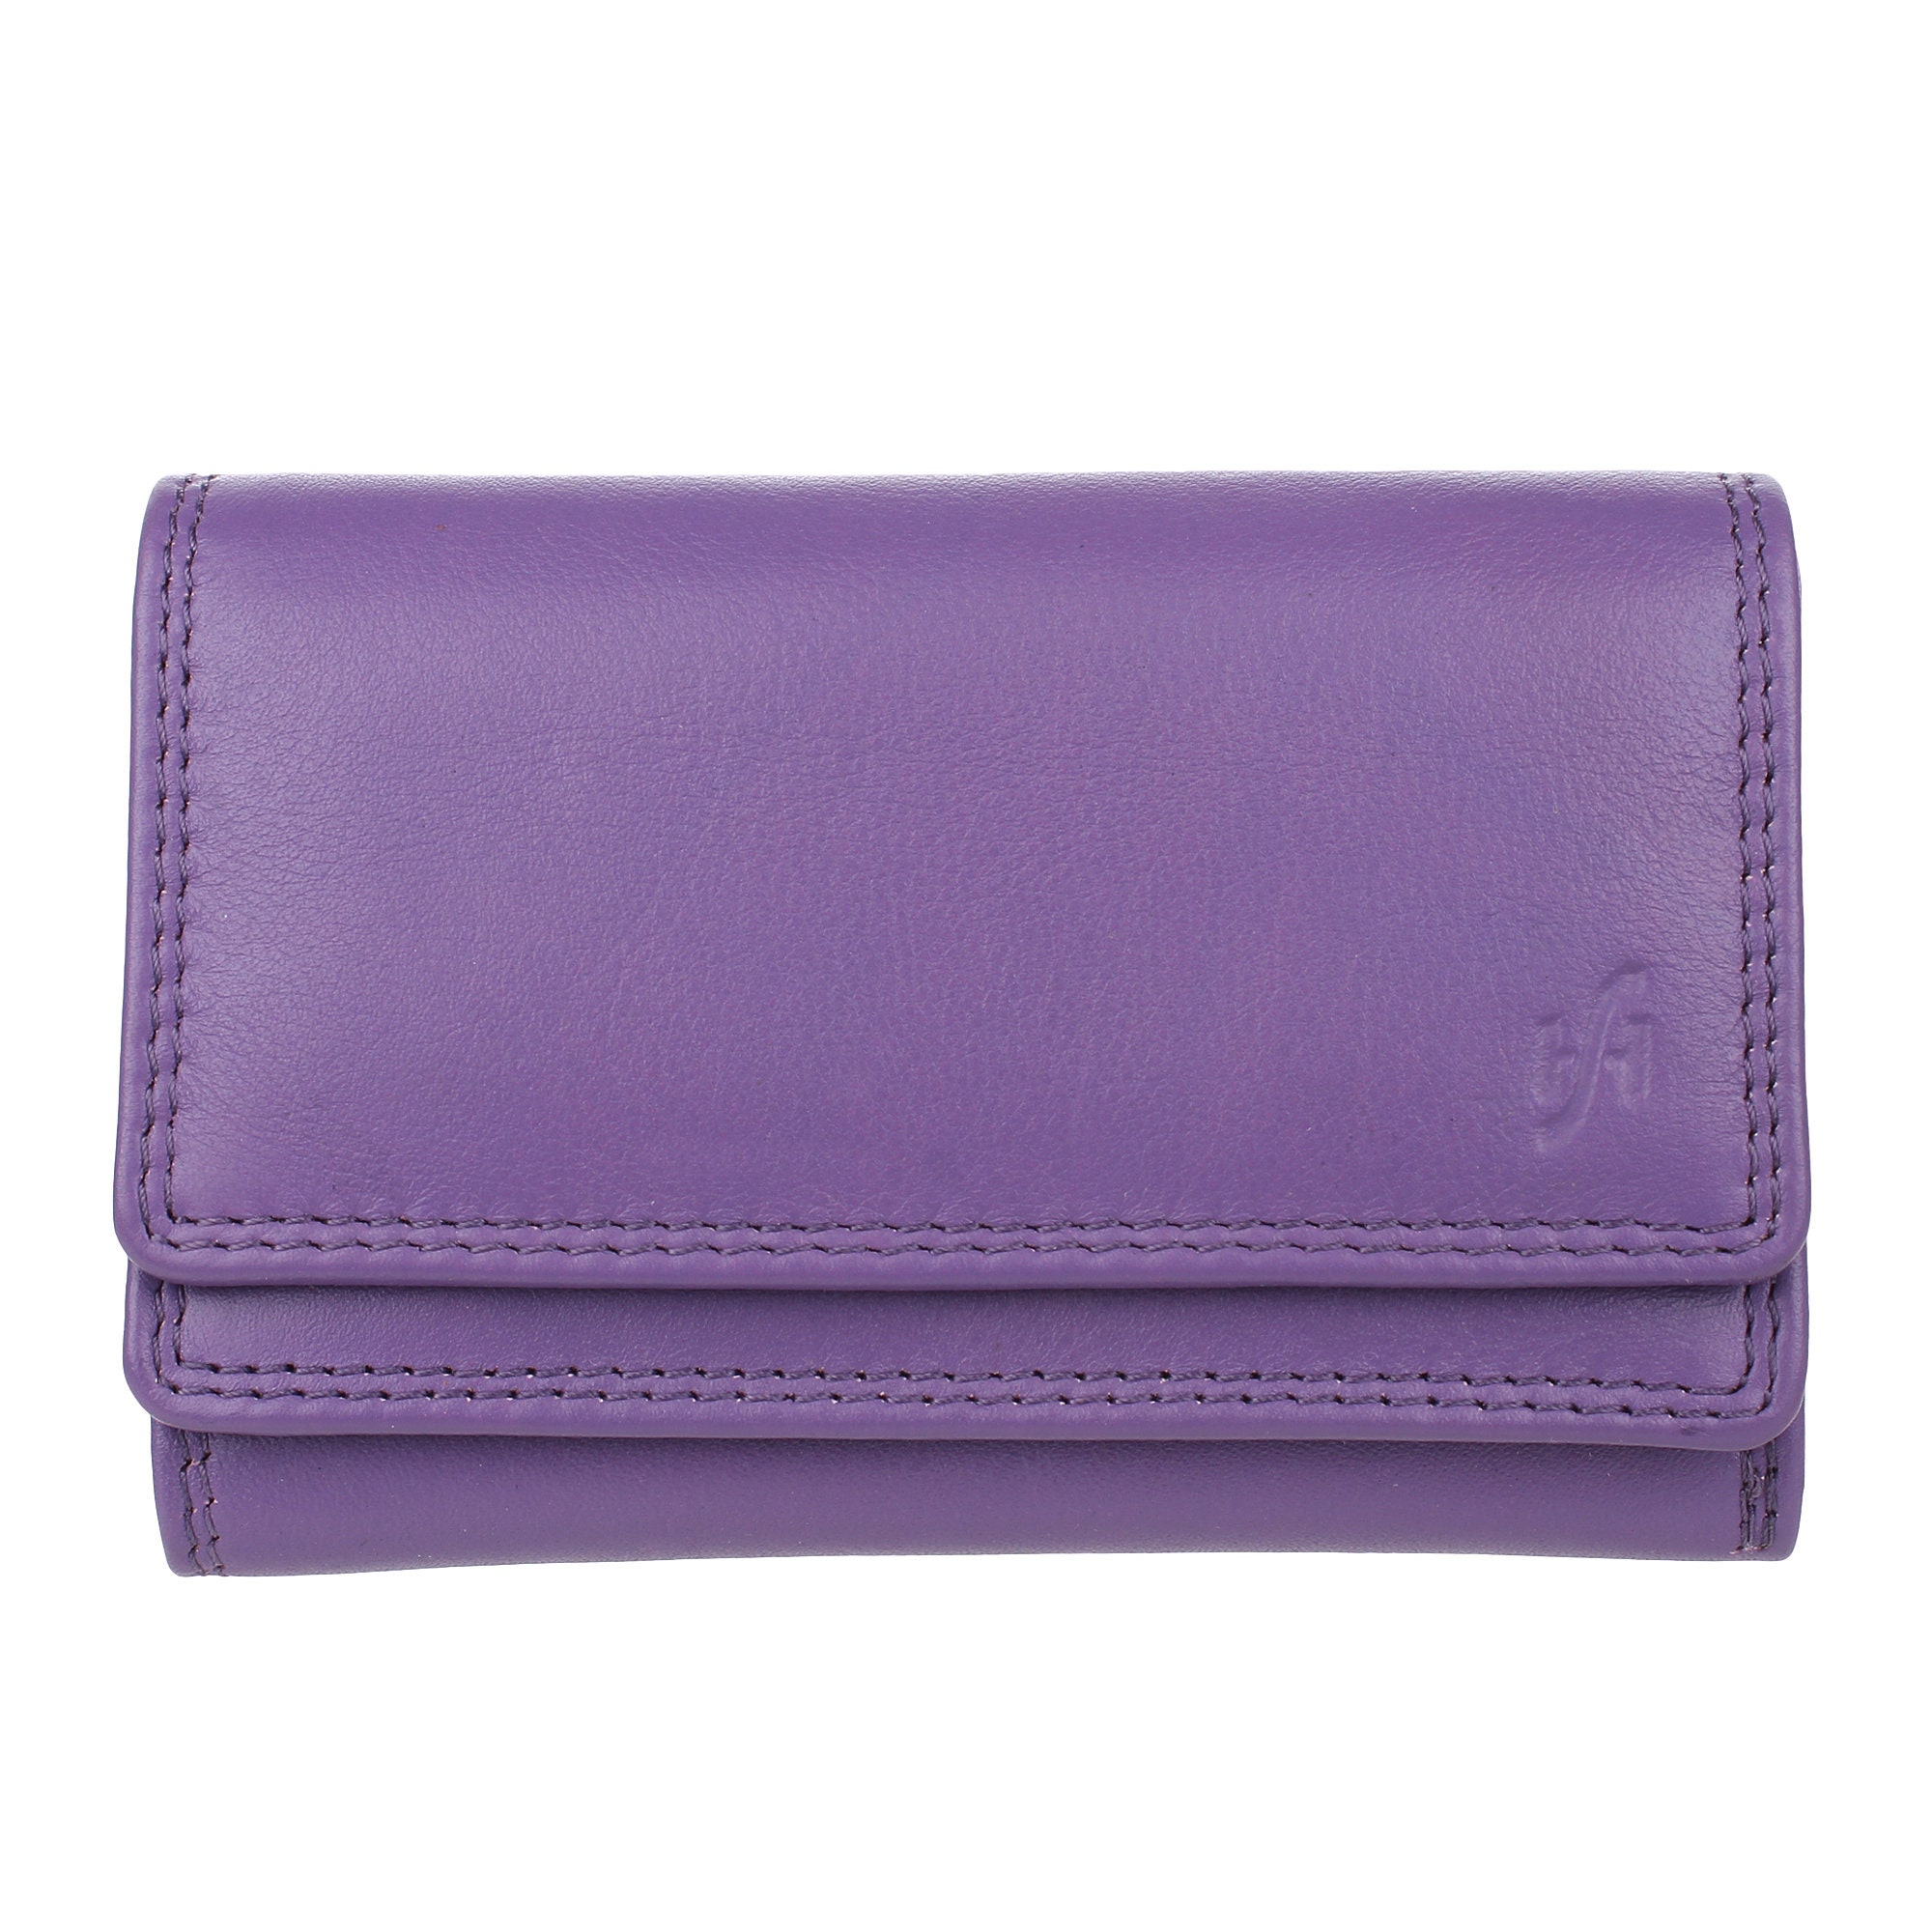 Ladies Womens RFID Blocking Super Soft Premium Leather Trifold Purse Wallet 